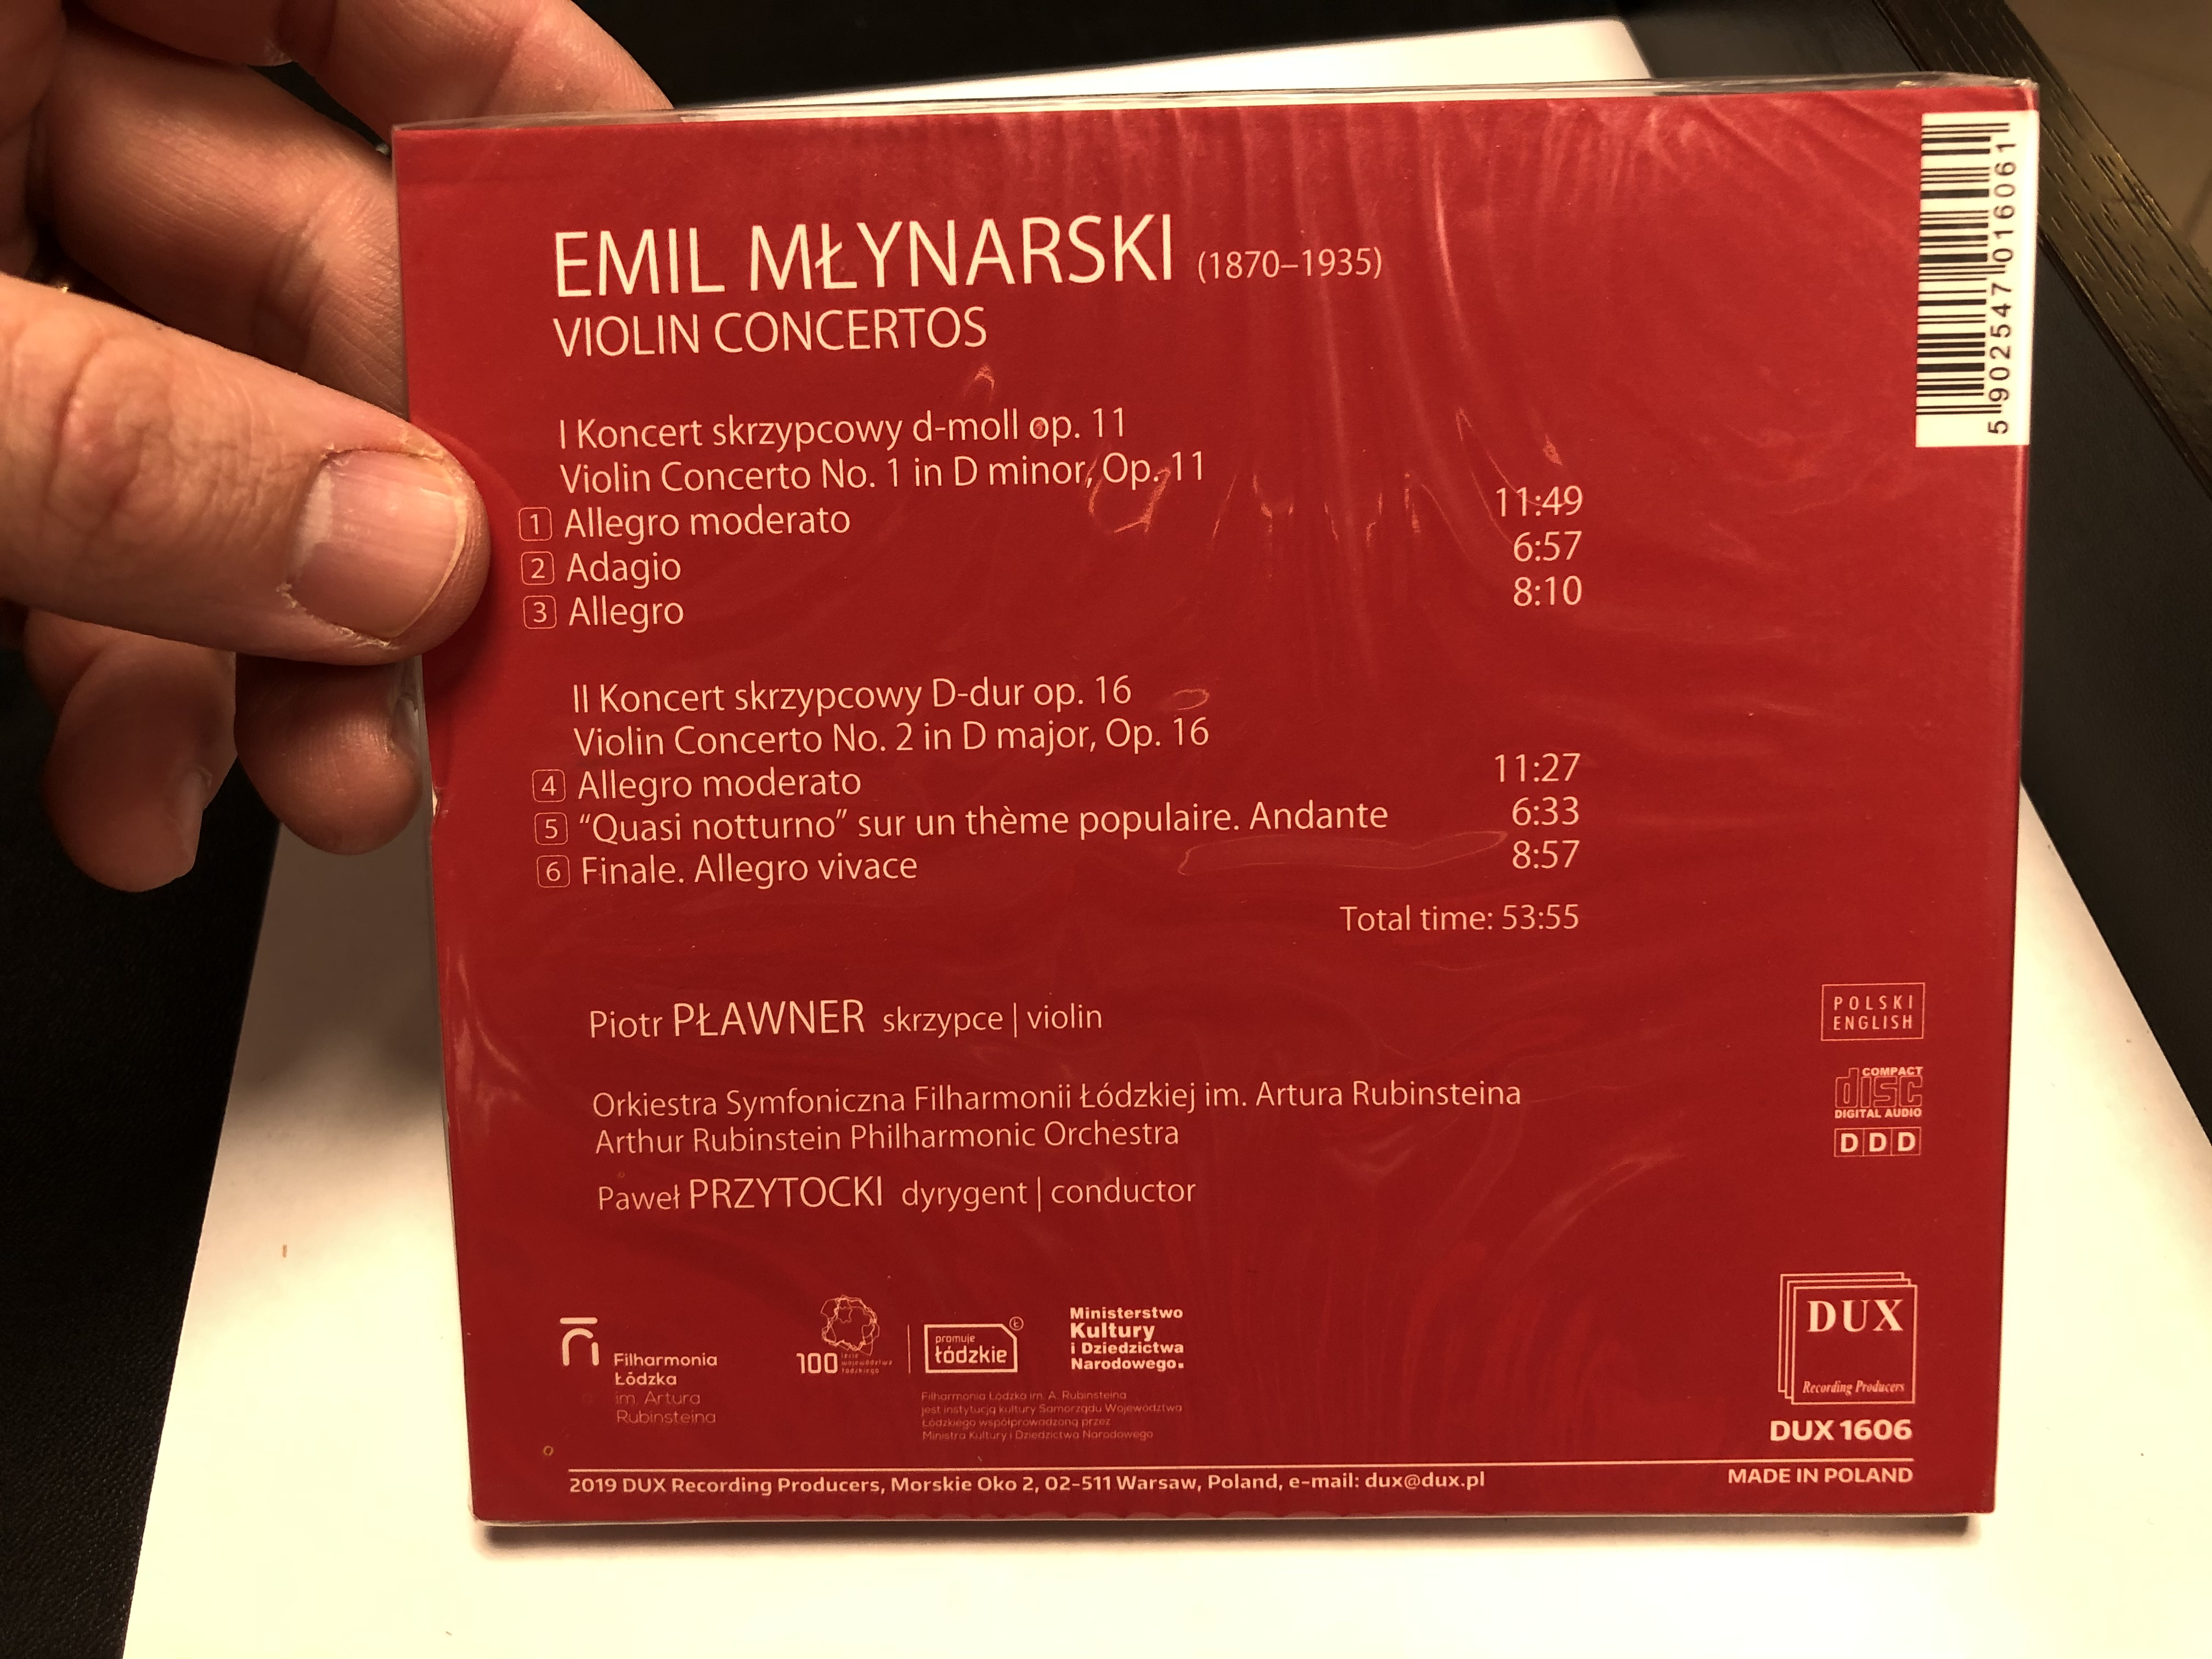 emil-m-ynarski-piotr-p-awner-artur-rubinstein-philharmonic-orchestra-pawe-przytocki-violin-concertos-no.-1-in-d-minor-op.-11-no.-2-in-d-major-op.-16-dux-audio-cd-2019-dux-1606.jpg